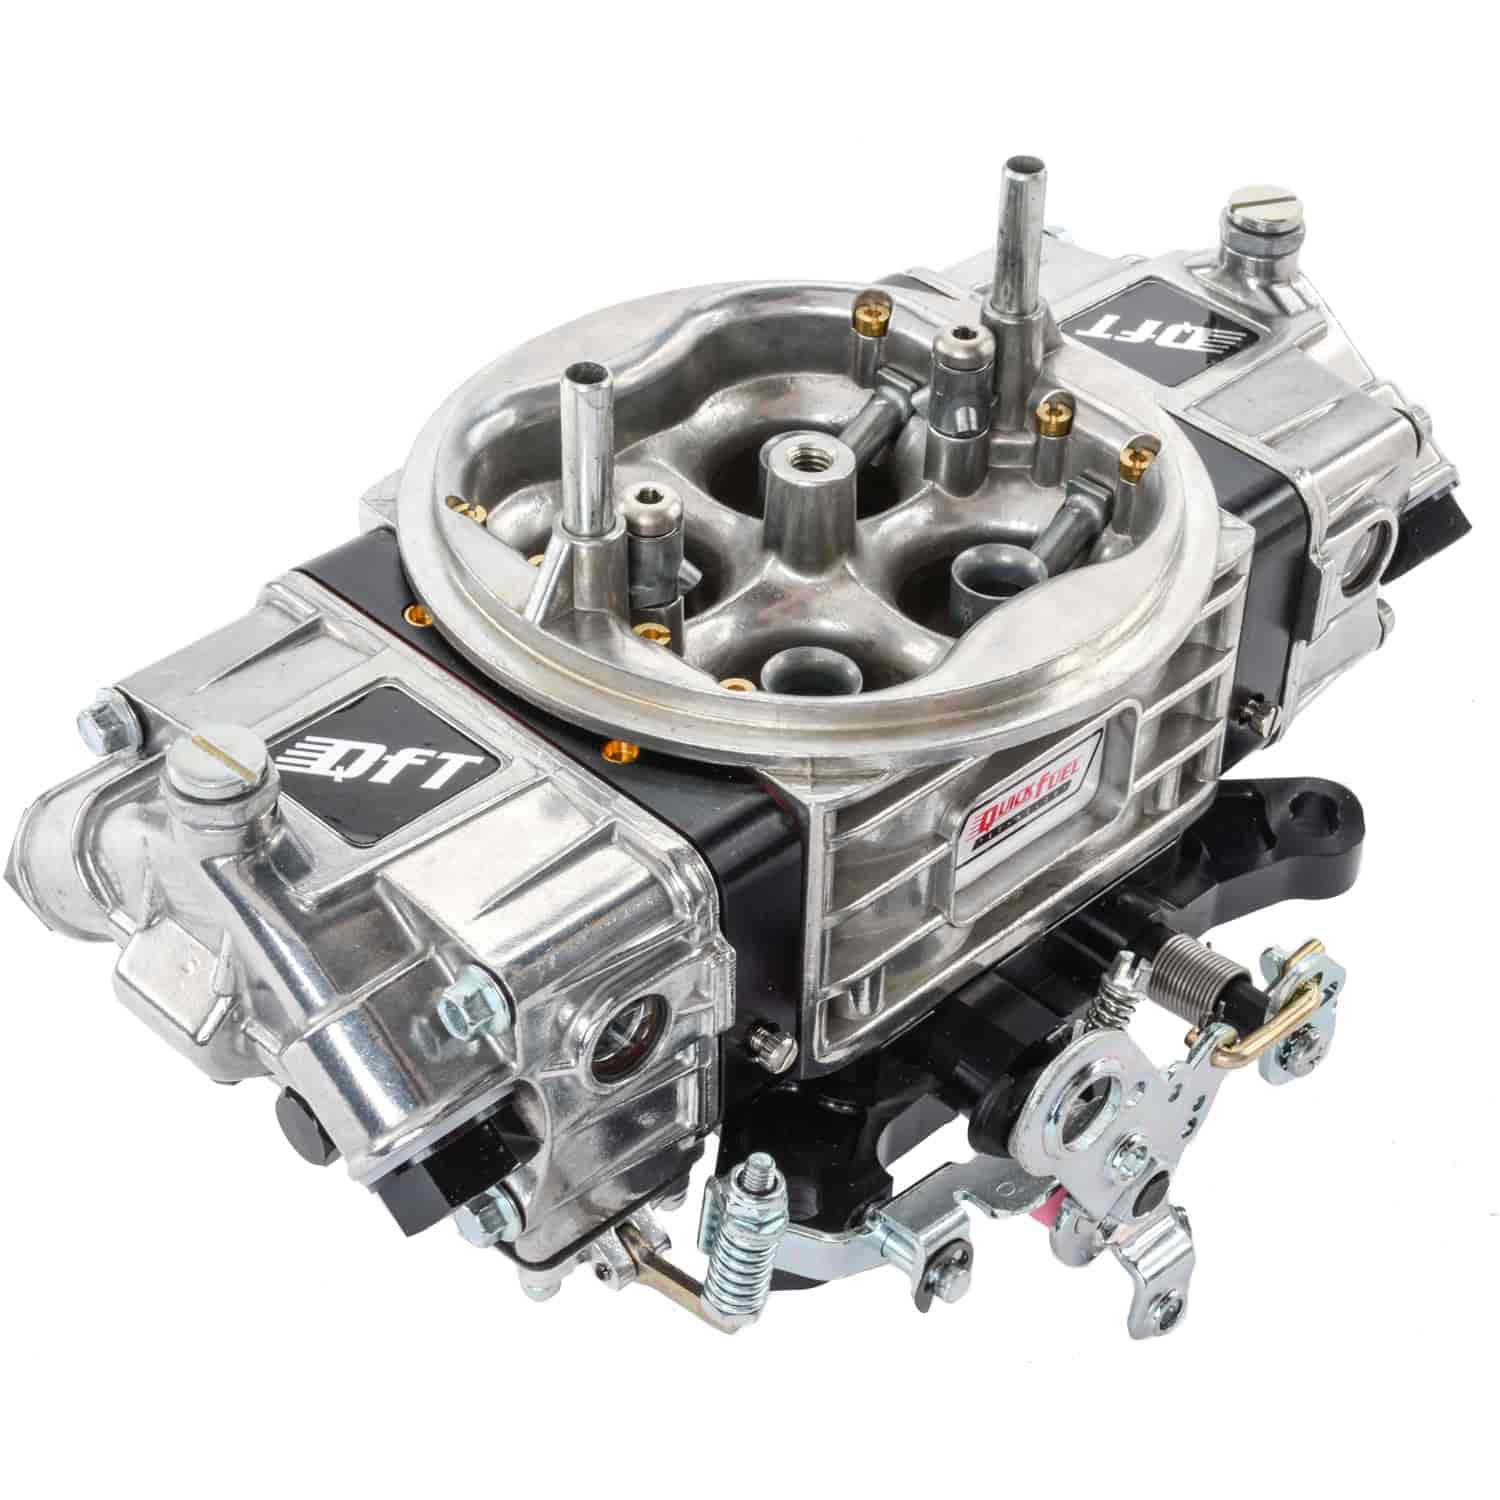 Race-Q 850 CFM Carburetor